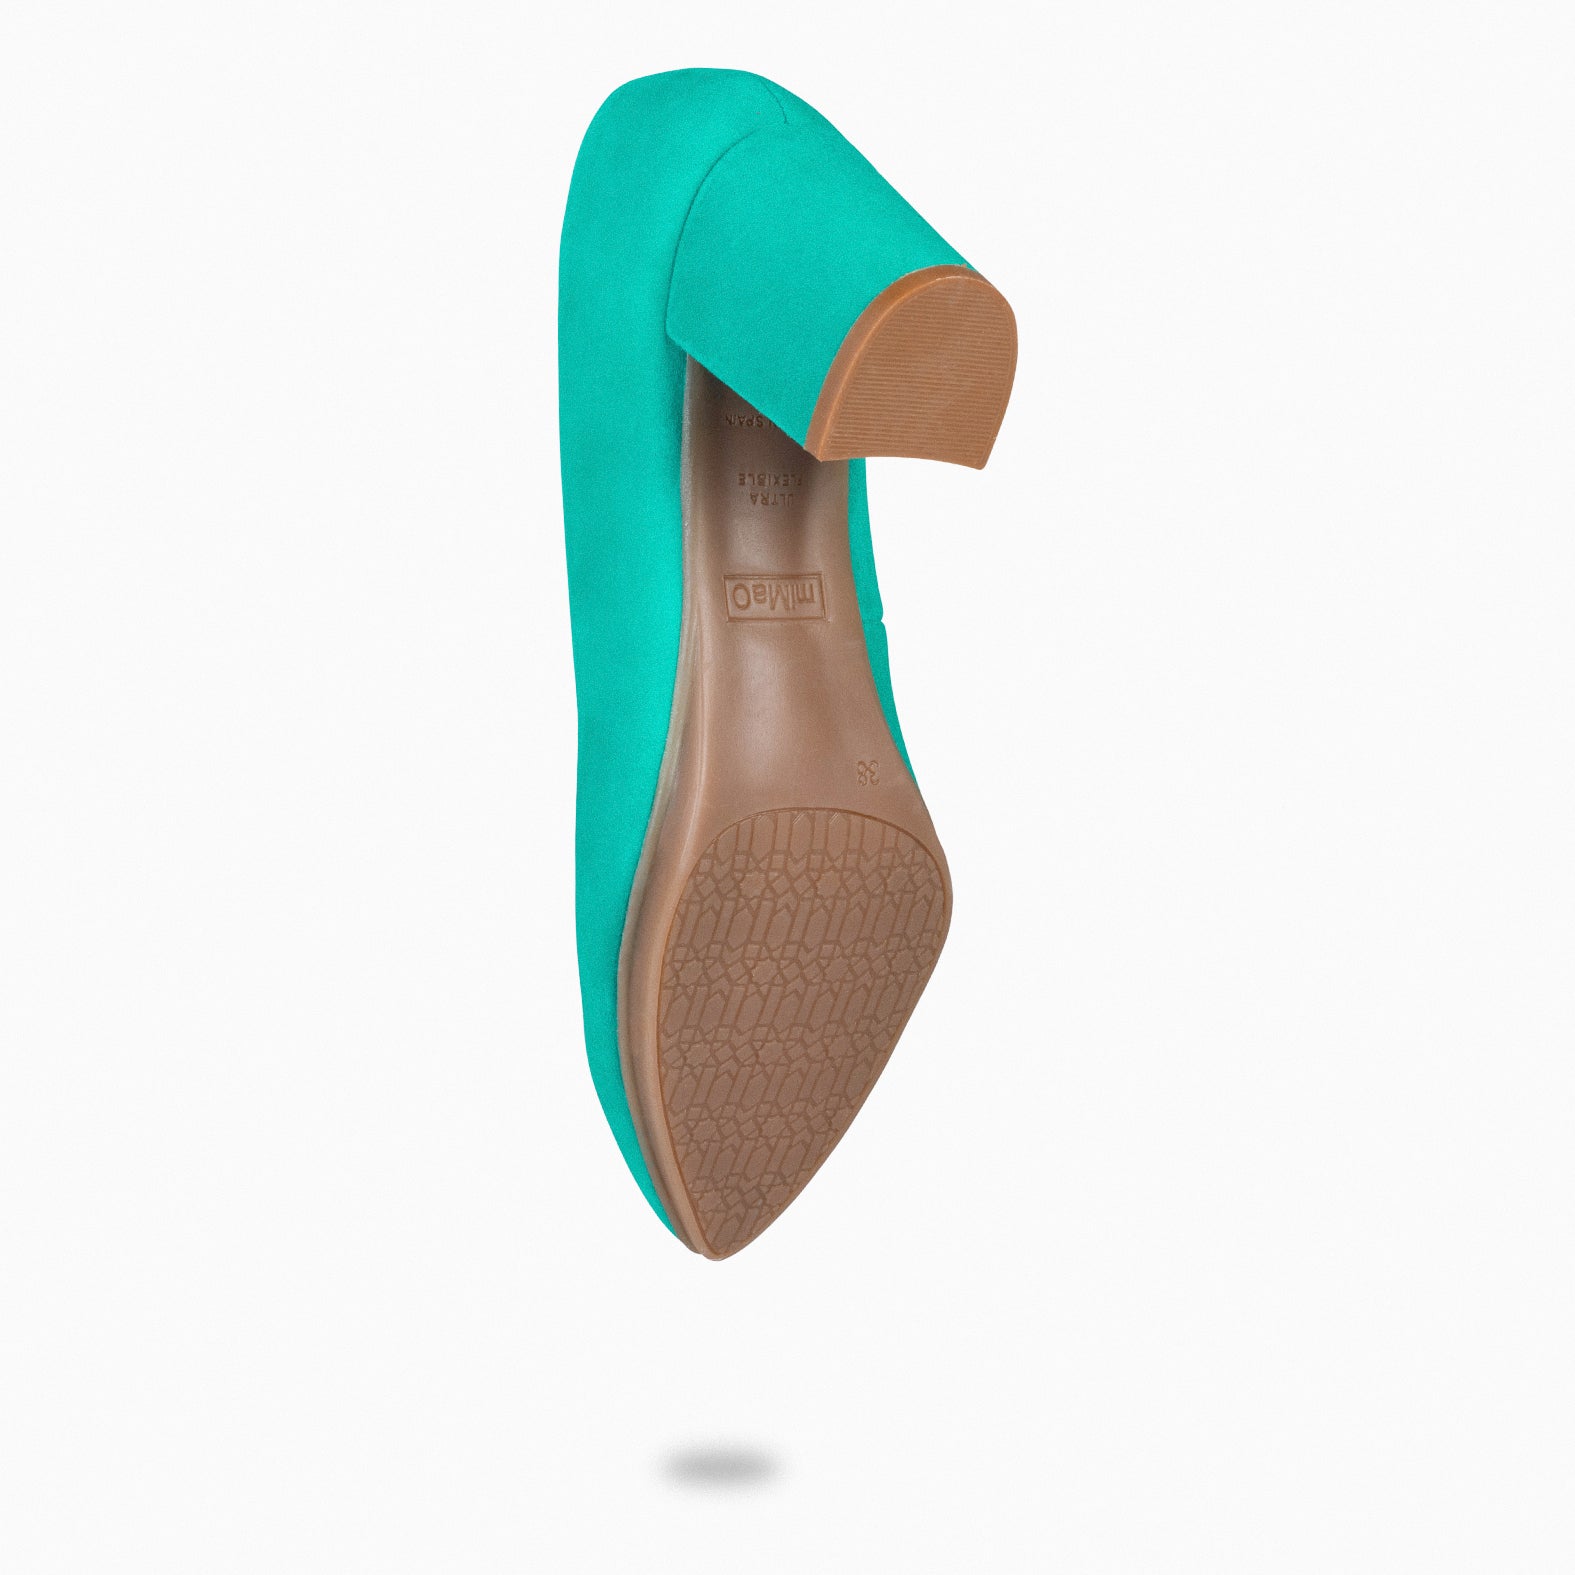 CARAMELO Spanish Designer leather sky egg blue teal shoe heels UK 4.5 EU 37  NEW | eBay